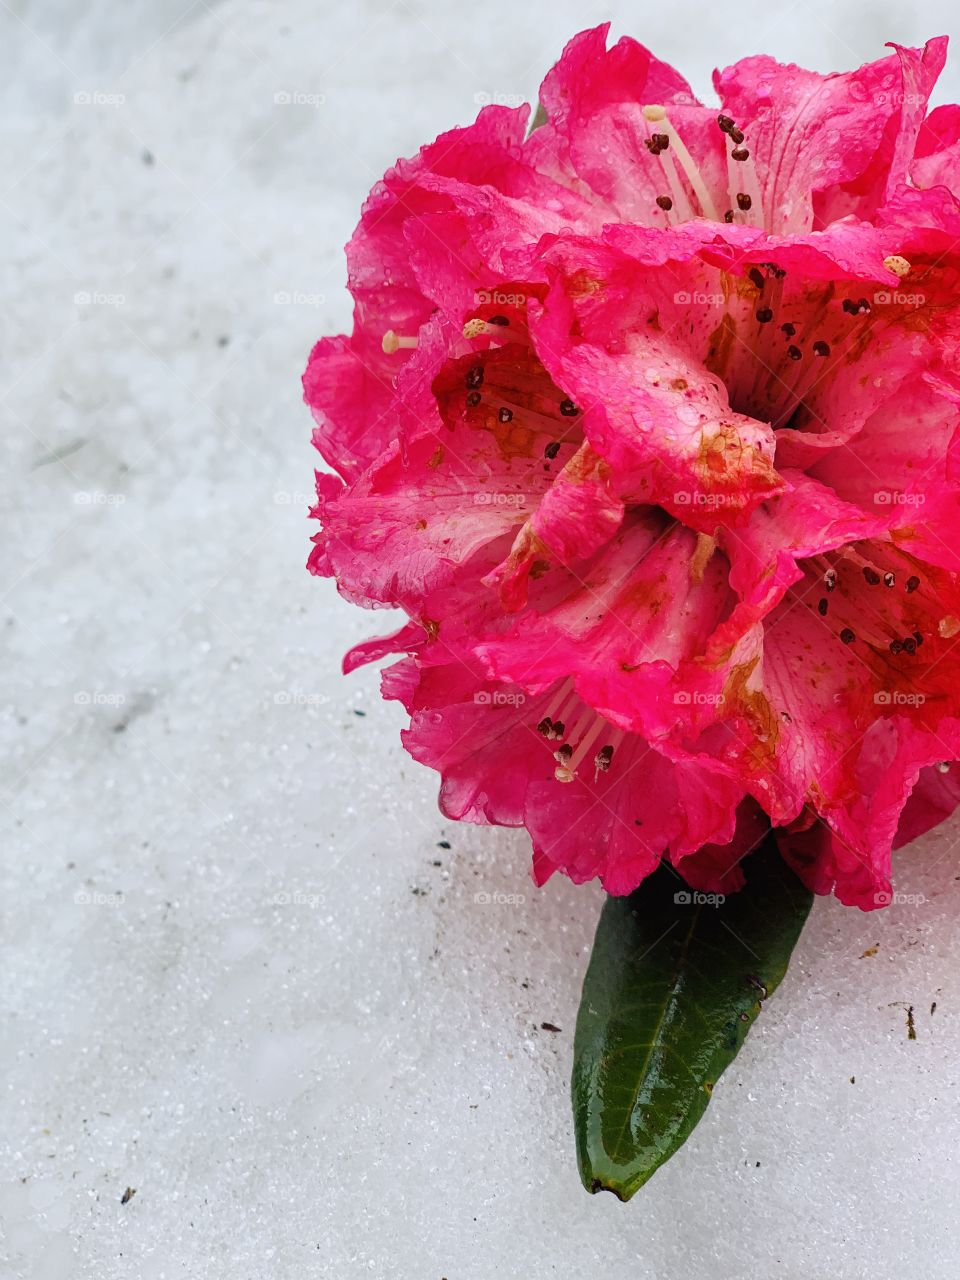 #Rhododendron #fresh #pinkFlower